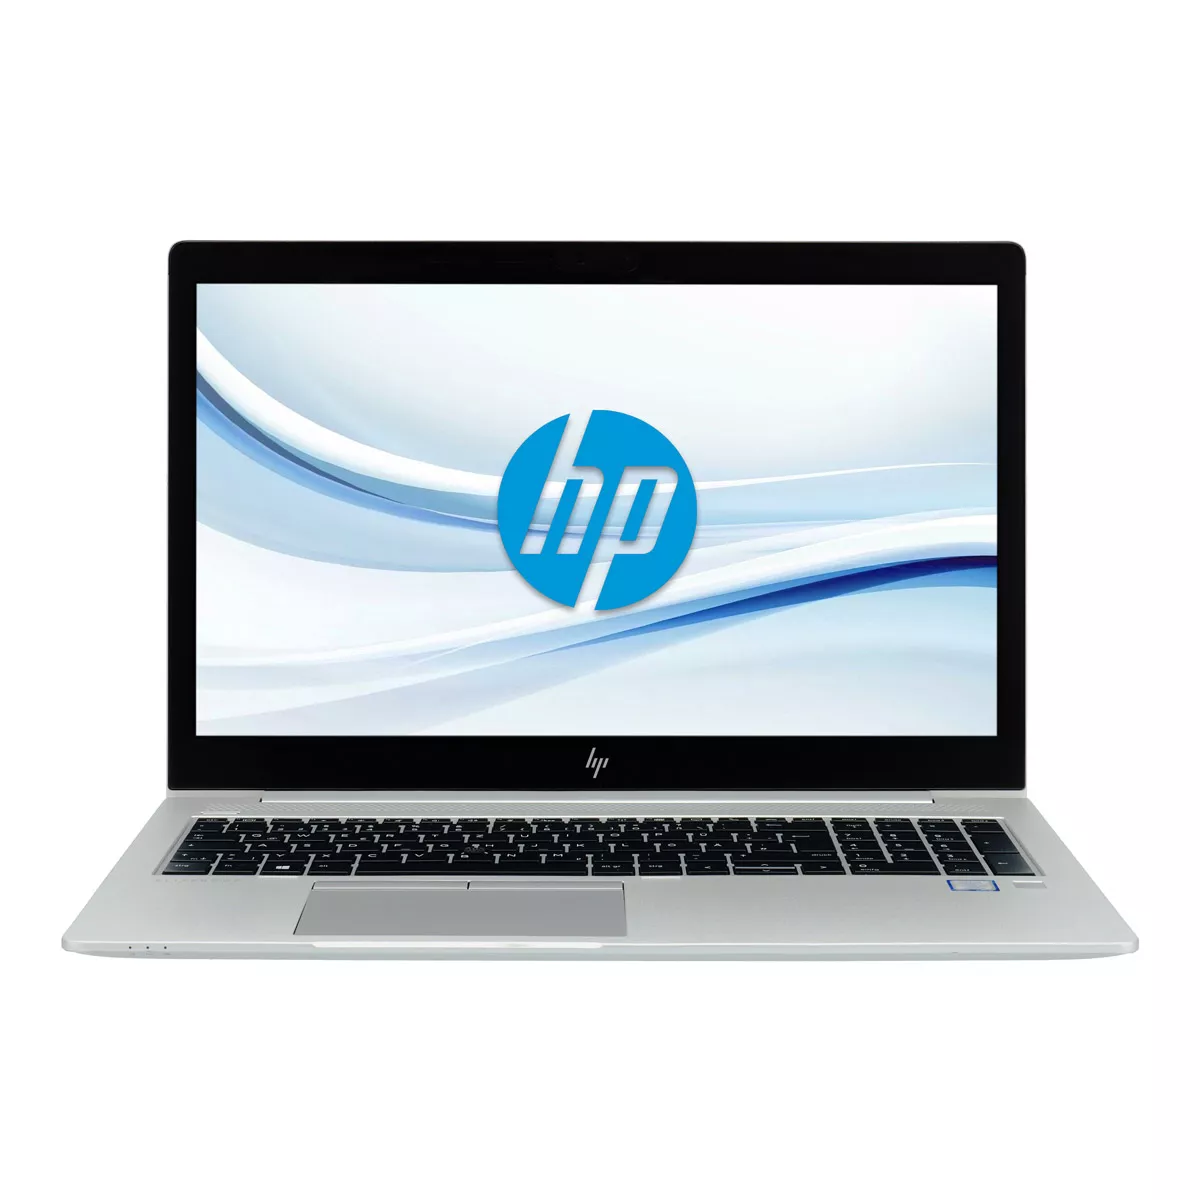 HP EliteBook 850 G5 Core i5 8250U Full-HD Touch 16 GB DDR4 240 GB M.2 nVME SSD Webcam B